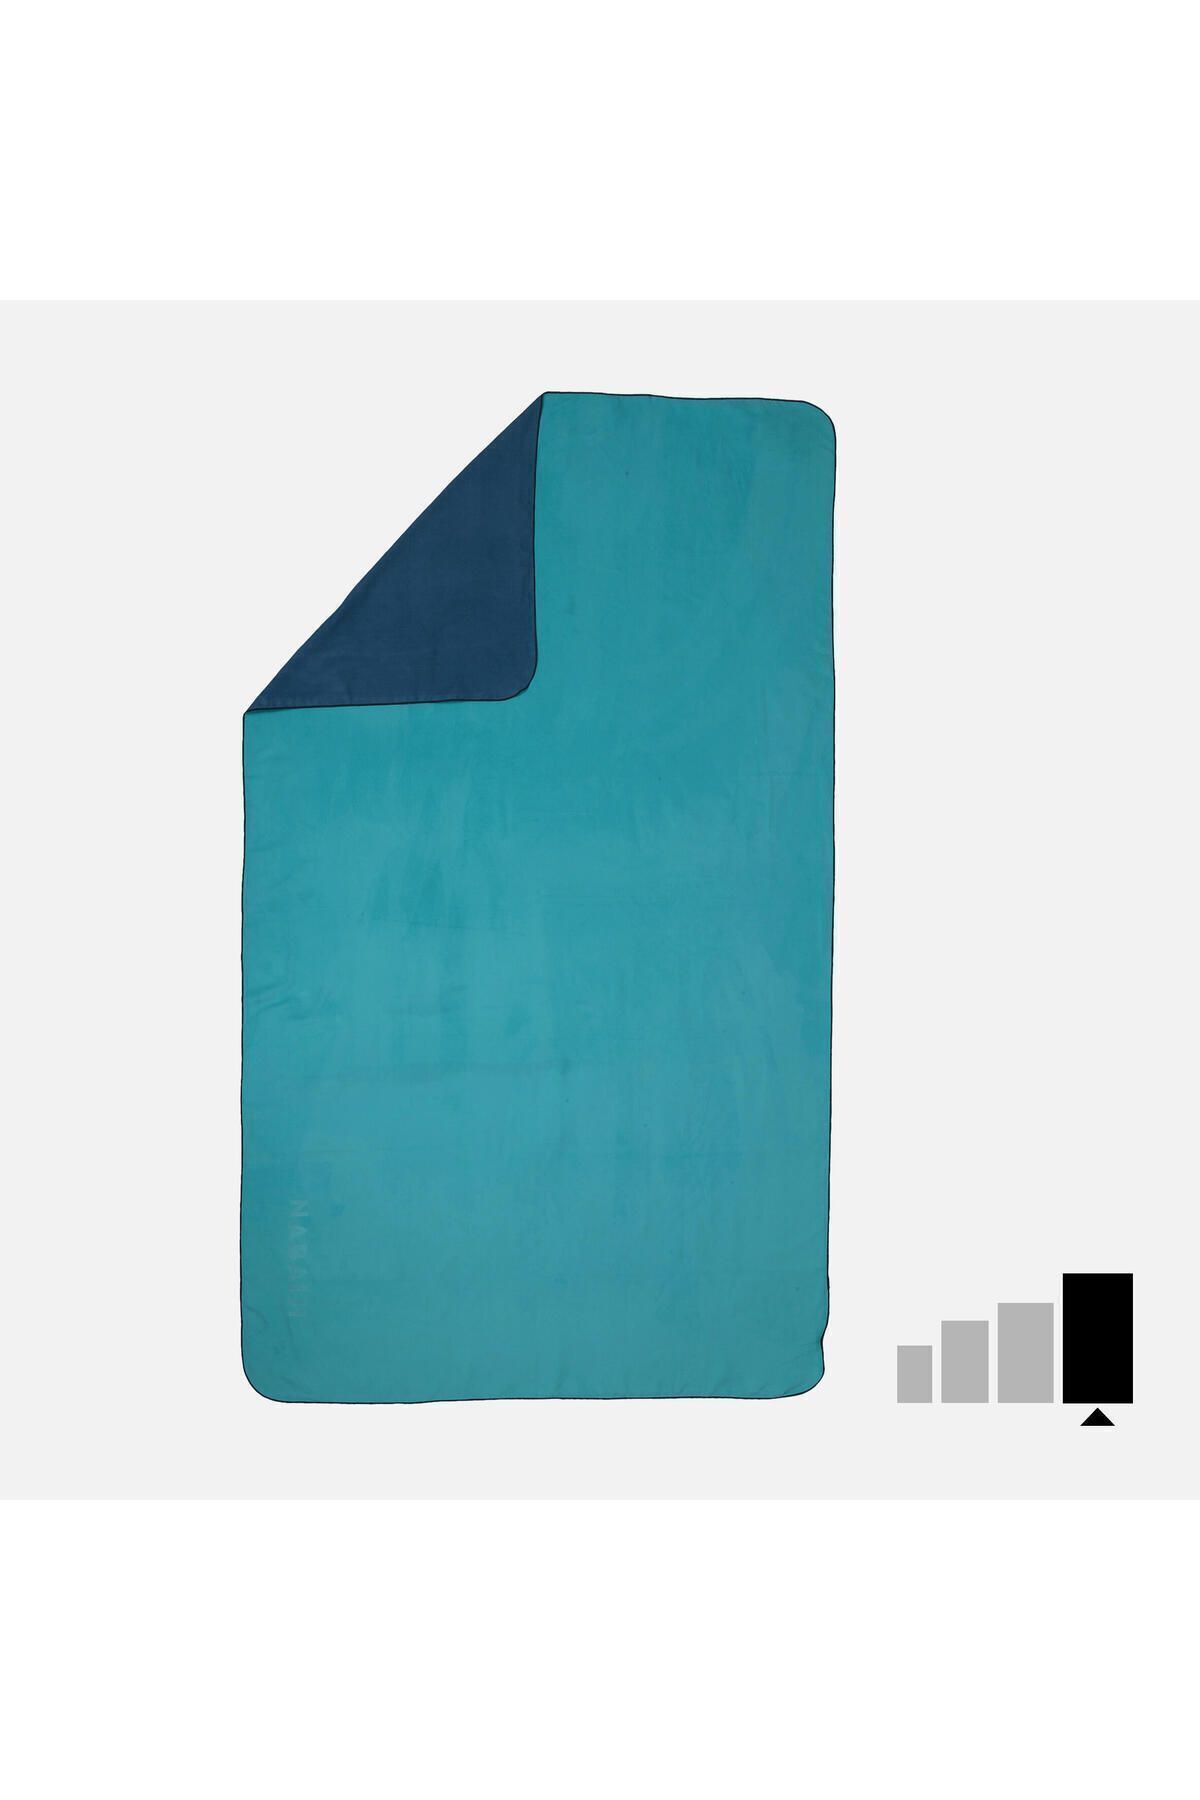 Decathlon Nabaiji Çift Taraflı Mikrofiber Havlu - XL Boy - Mavi / Yeşil - 110 X 175 cm